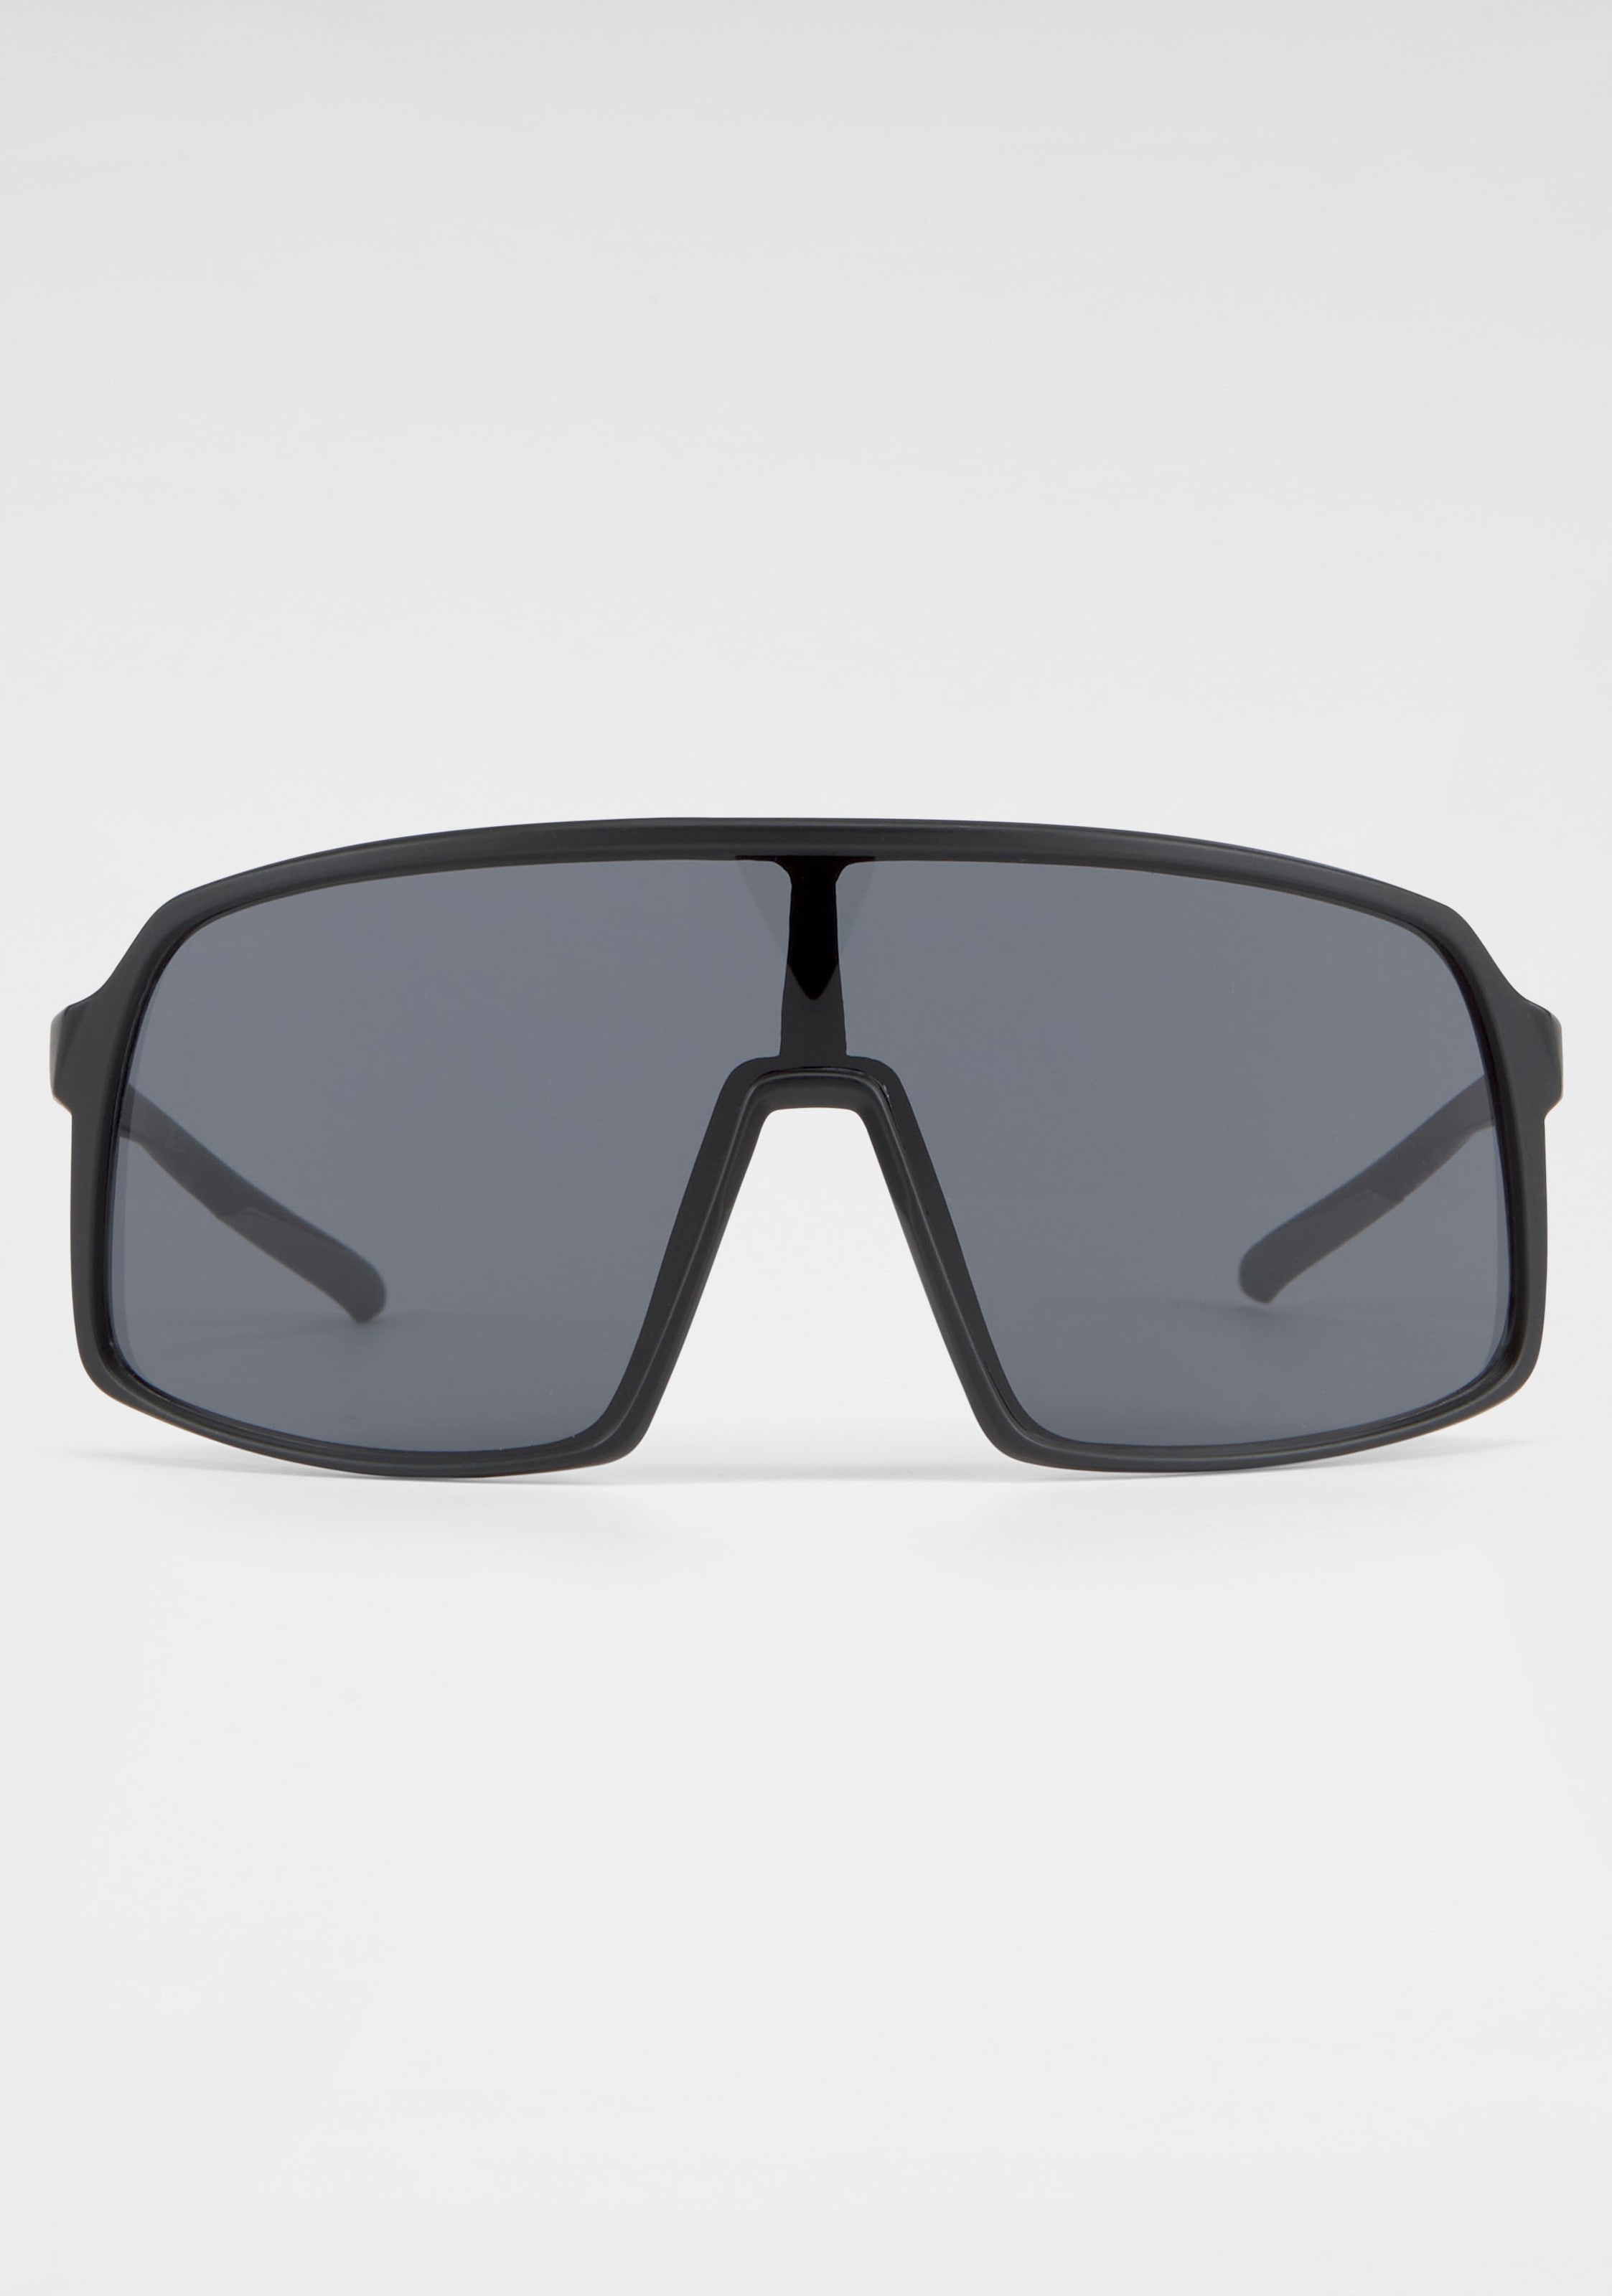 BACK IN BLACK Eyewear Sonnenbrille, grosse Gläser